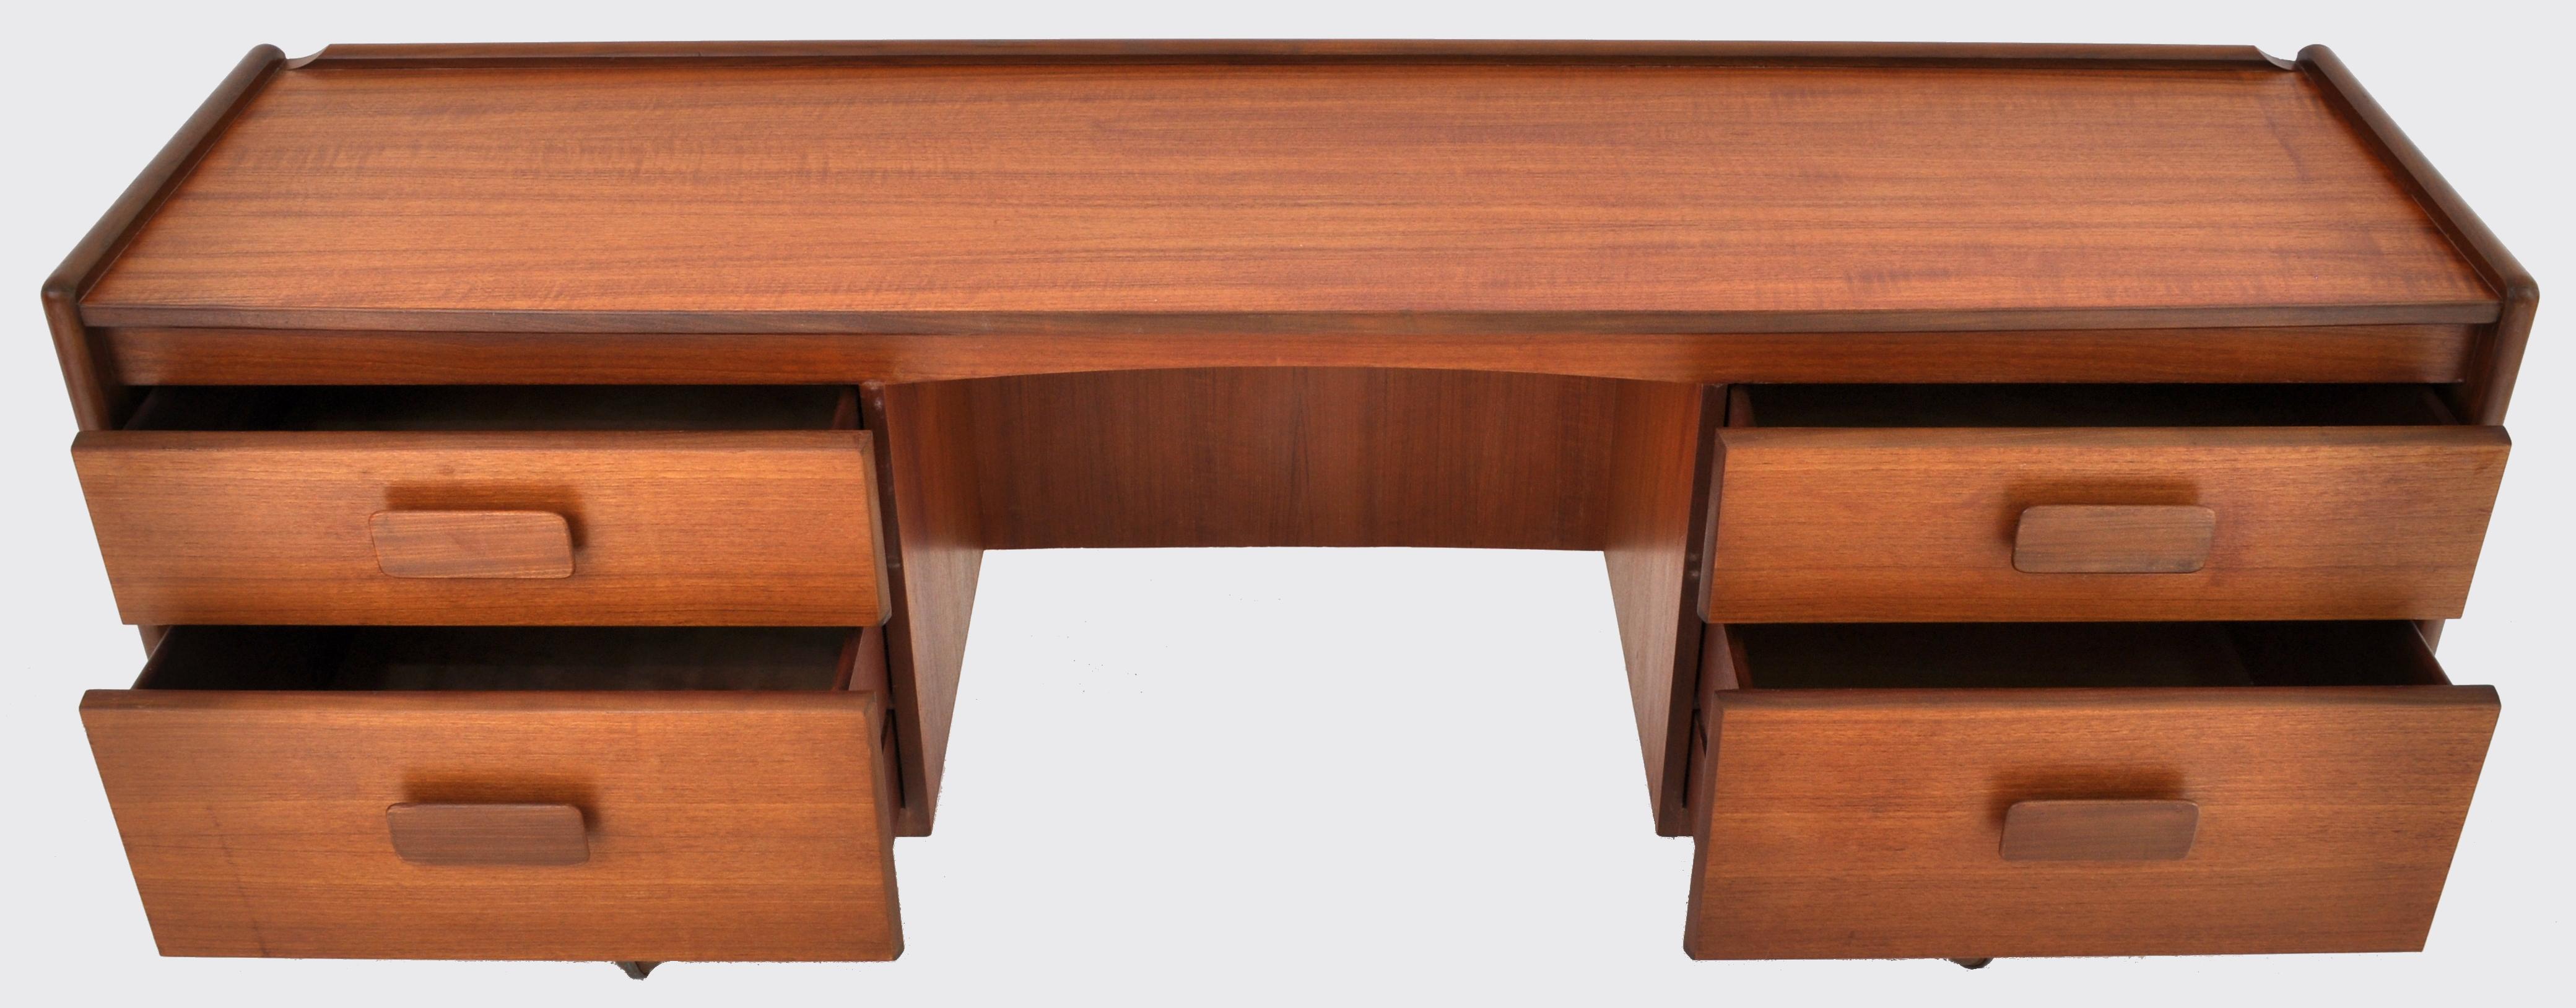 20th Century Mid-Century Modern Danish Style Desk in Teak by White & Newton Ltd., 1960s